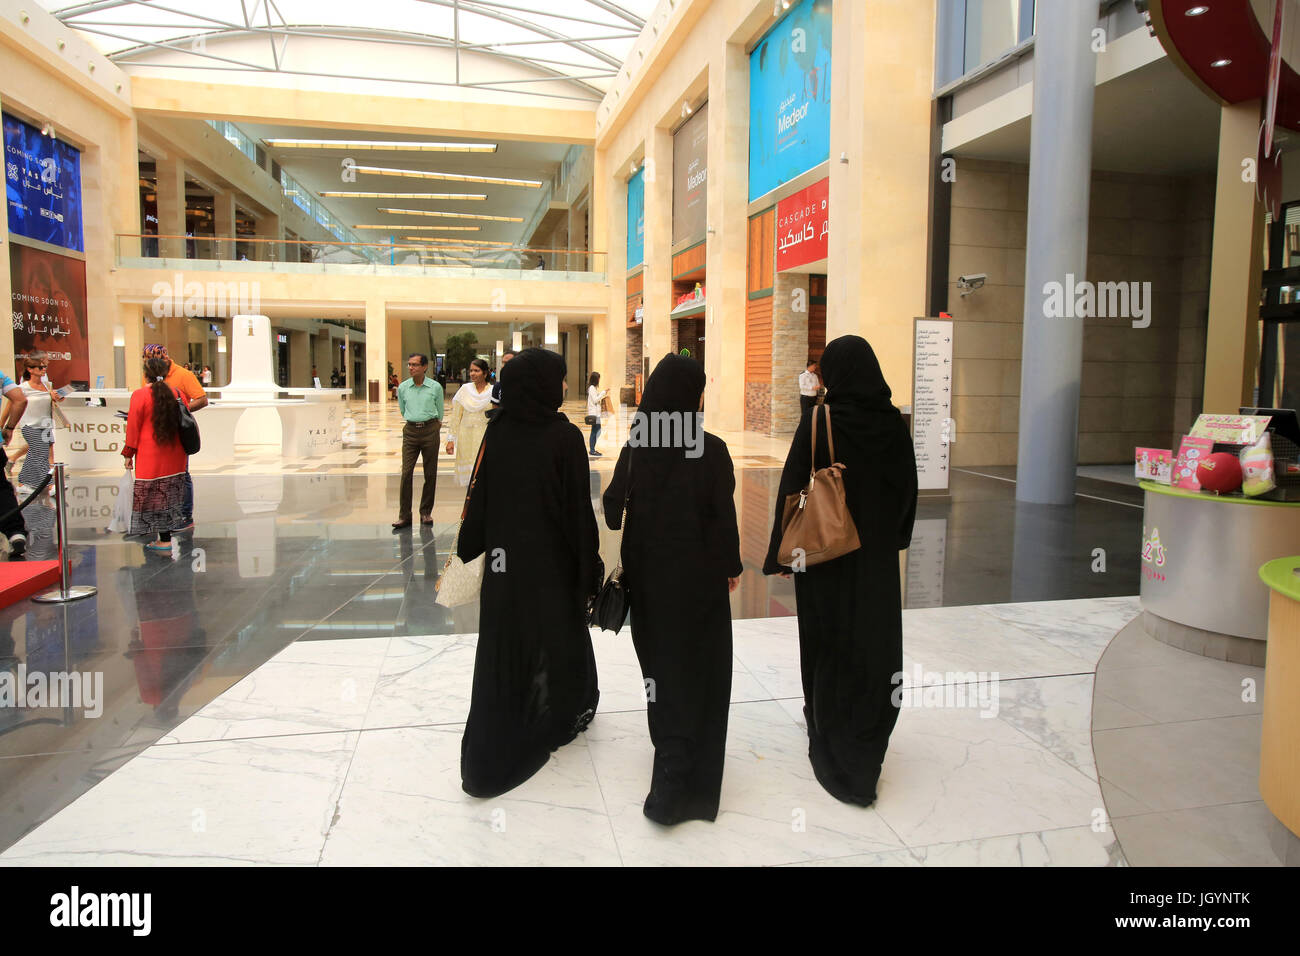 Muslim women wearing abaya. Emirate of Abu Dhabi. Stock Photo